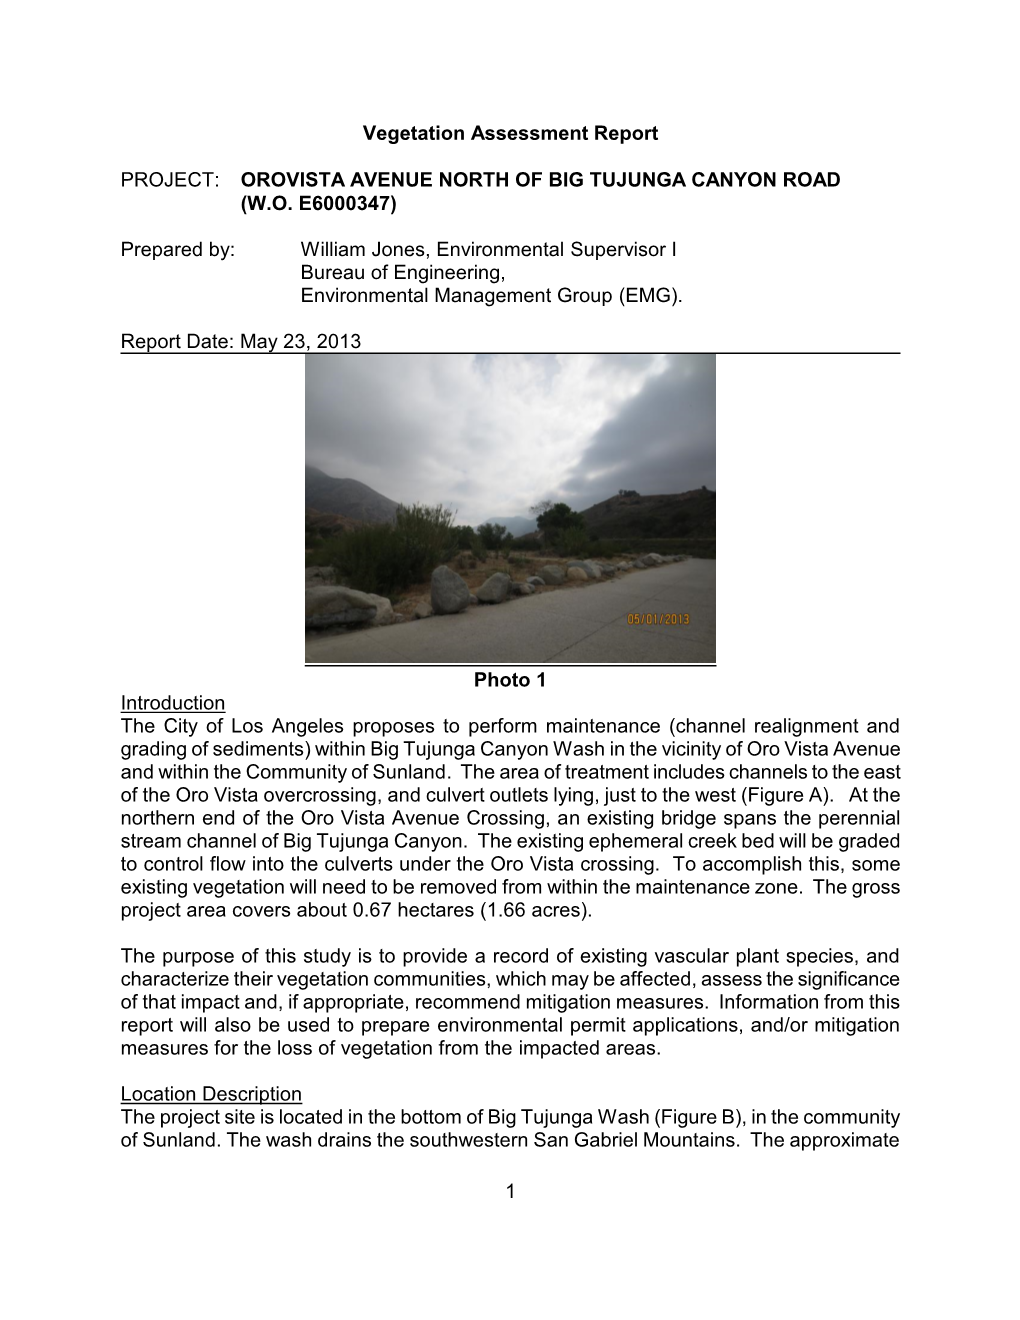 Vegetation Assessment Report for Oro Vista Avenue North of Big Tujunga